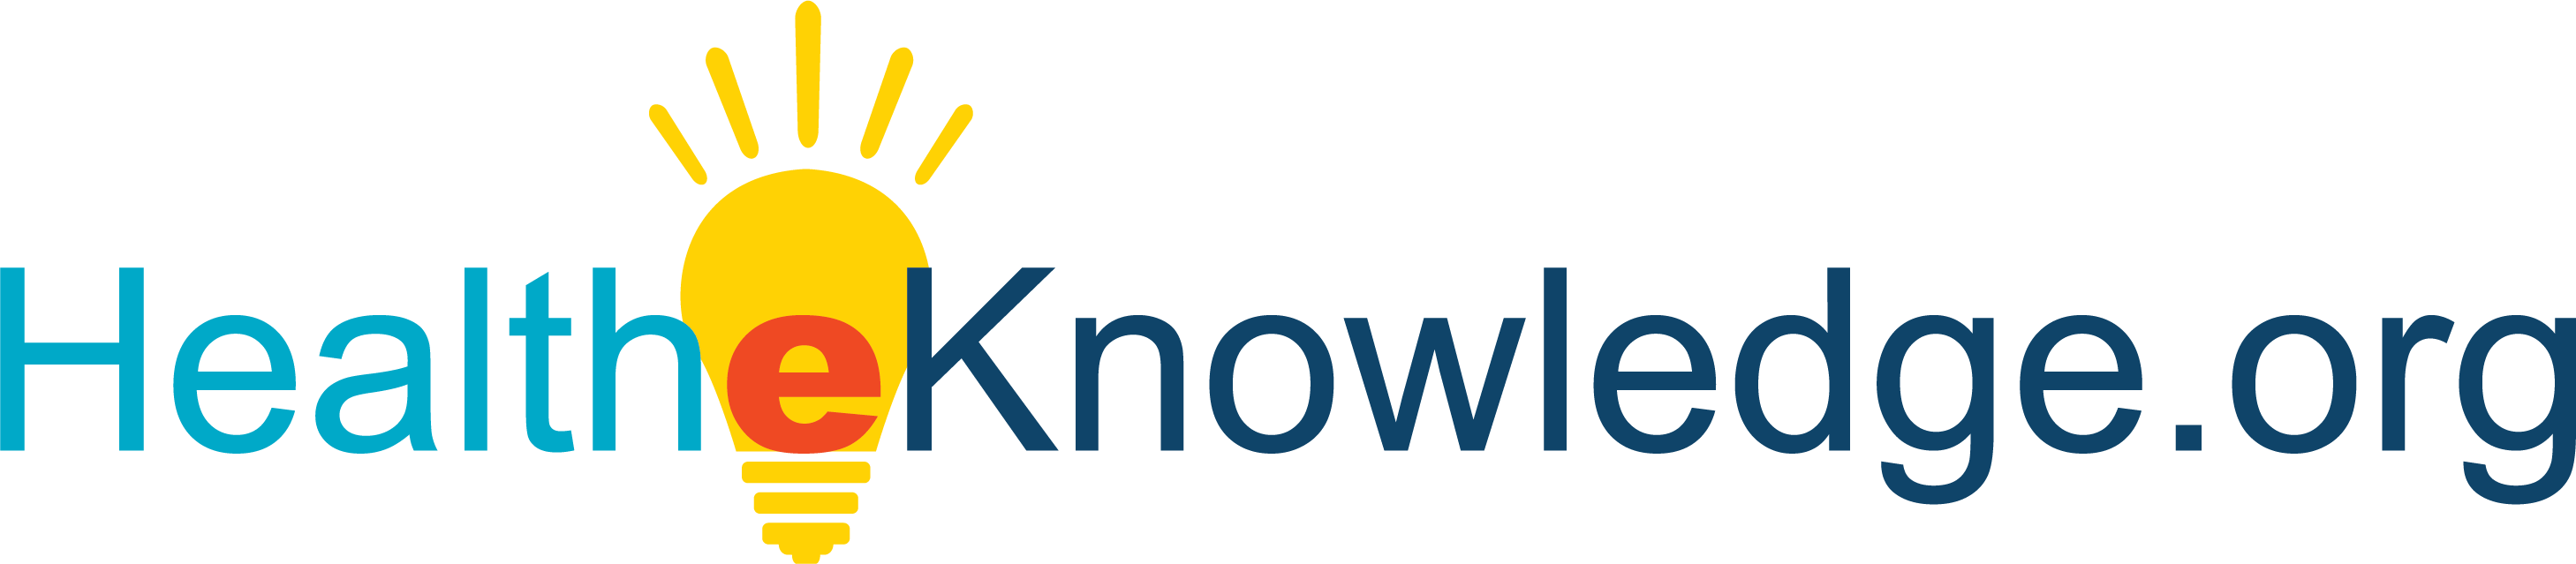 HealthEKnowledge logo